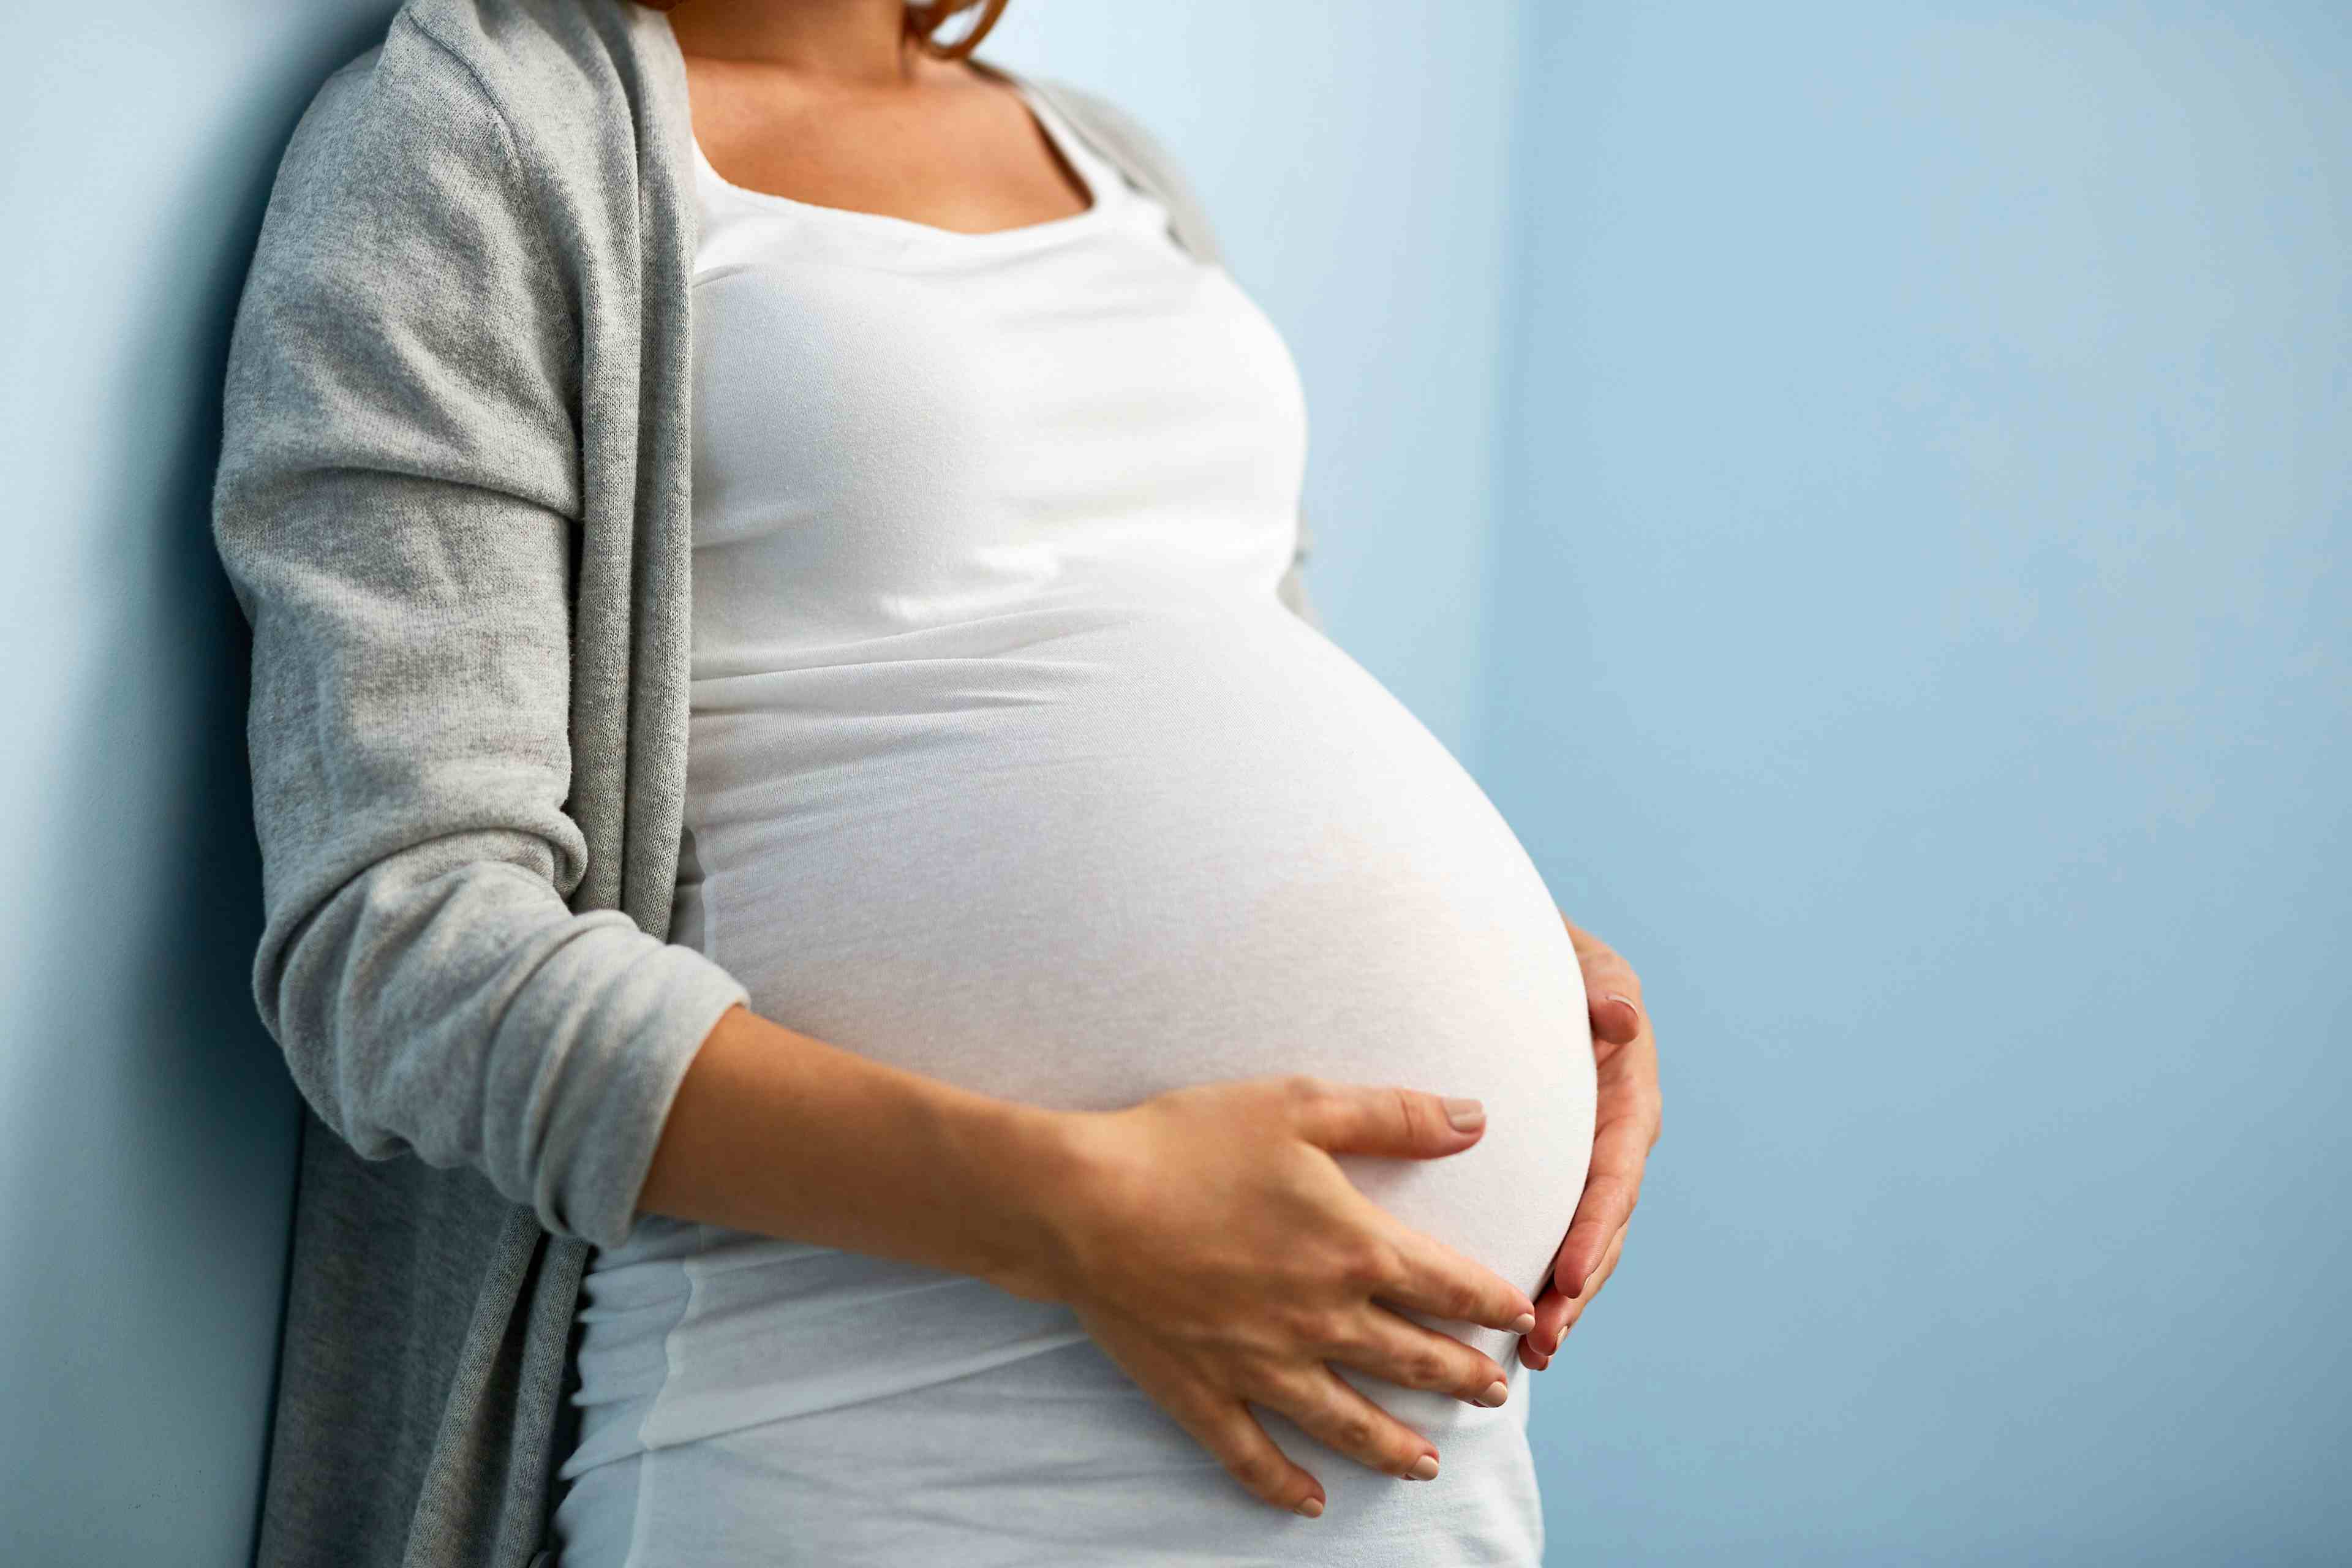 Pregnant Patient | image credit: pressmaster - stock.adobe.com